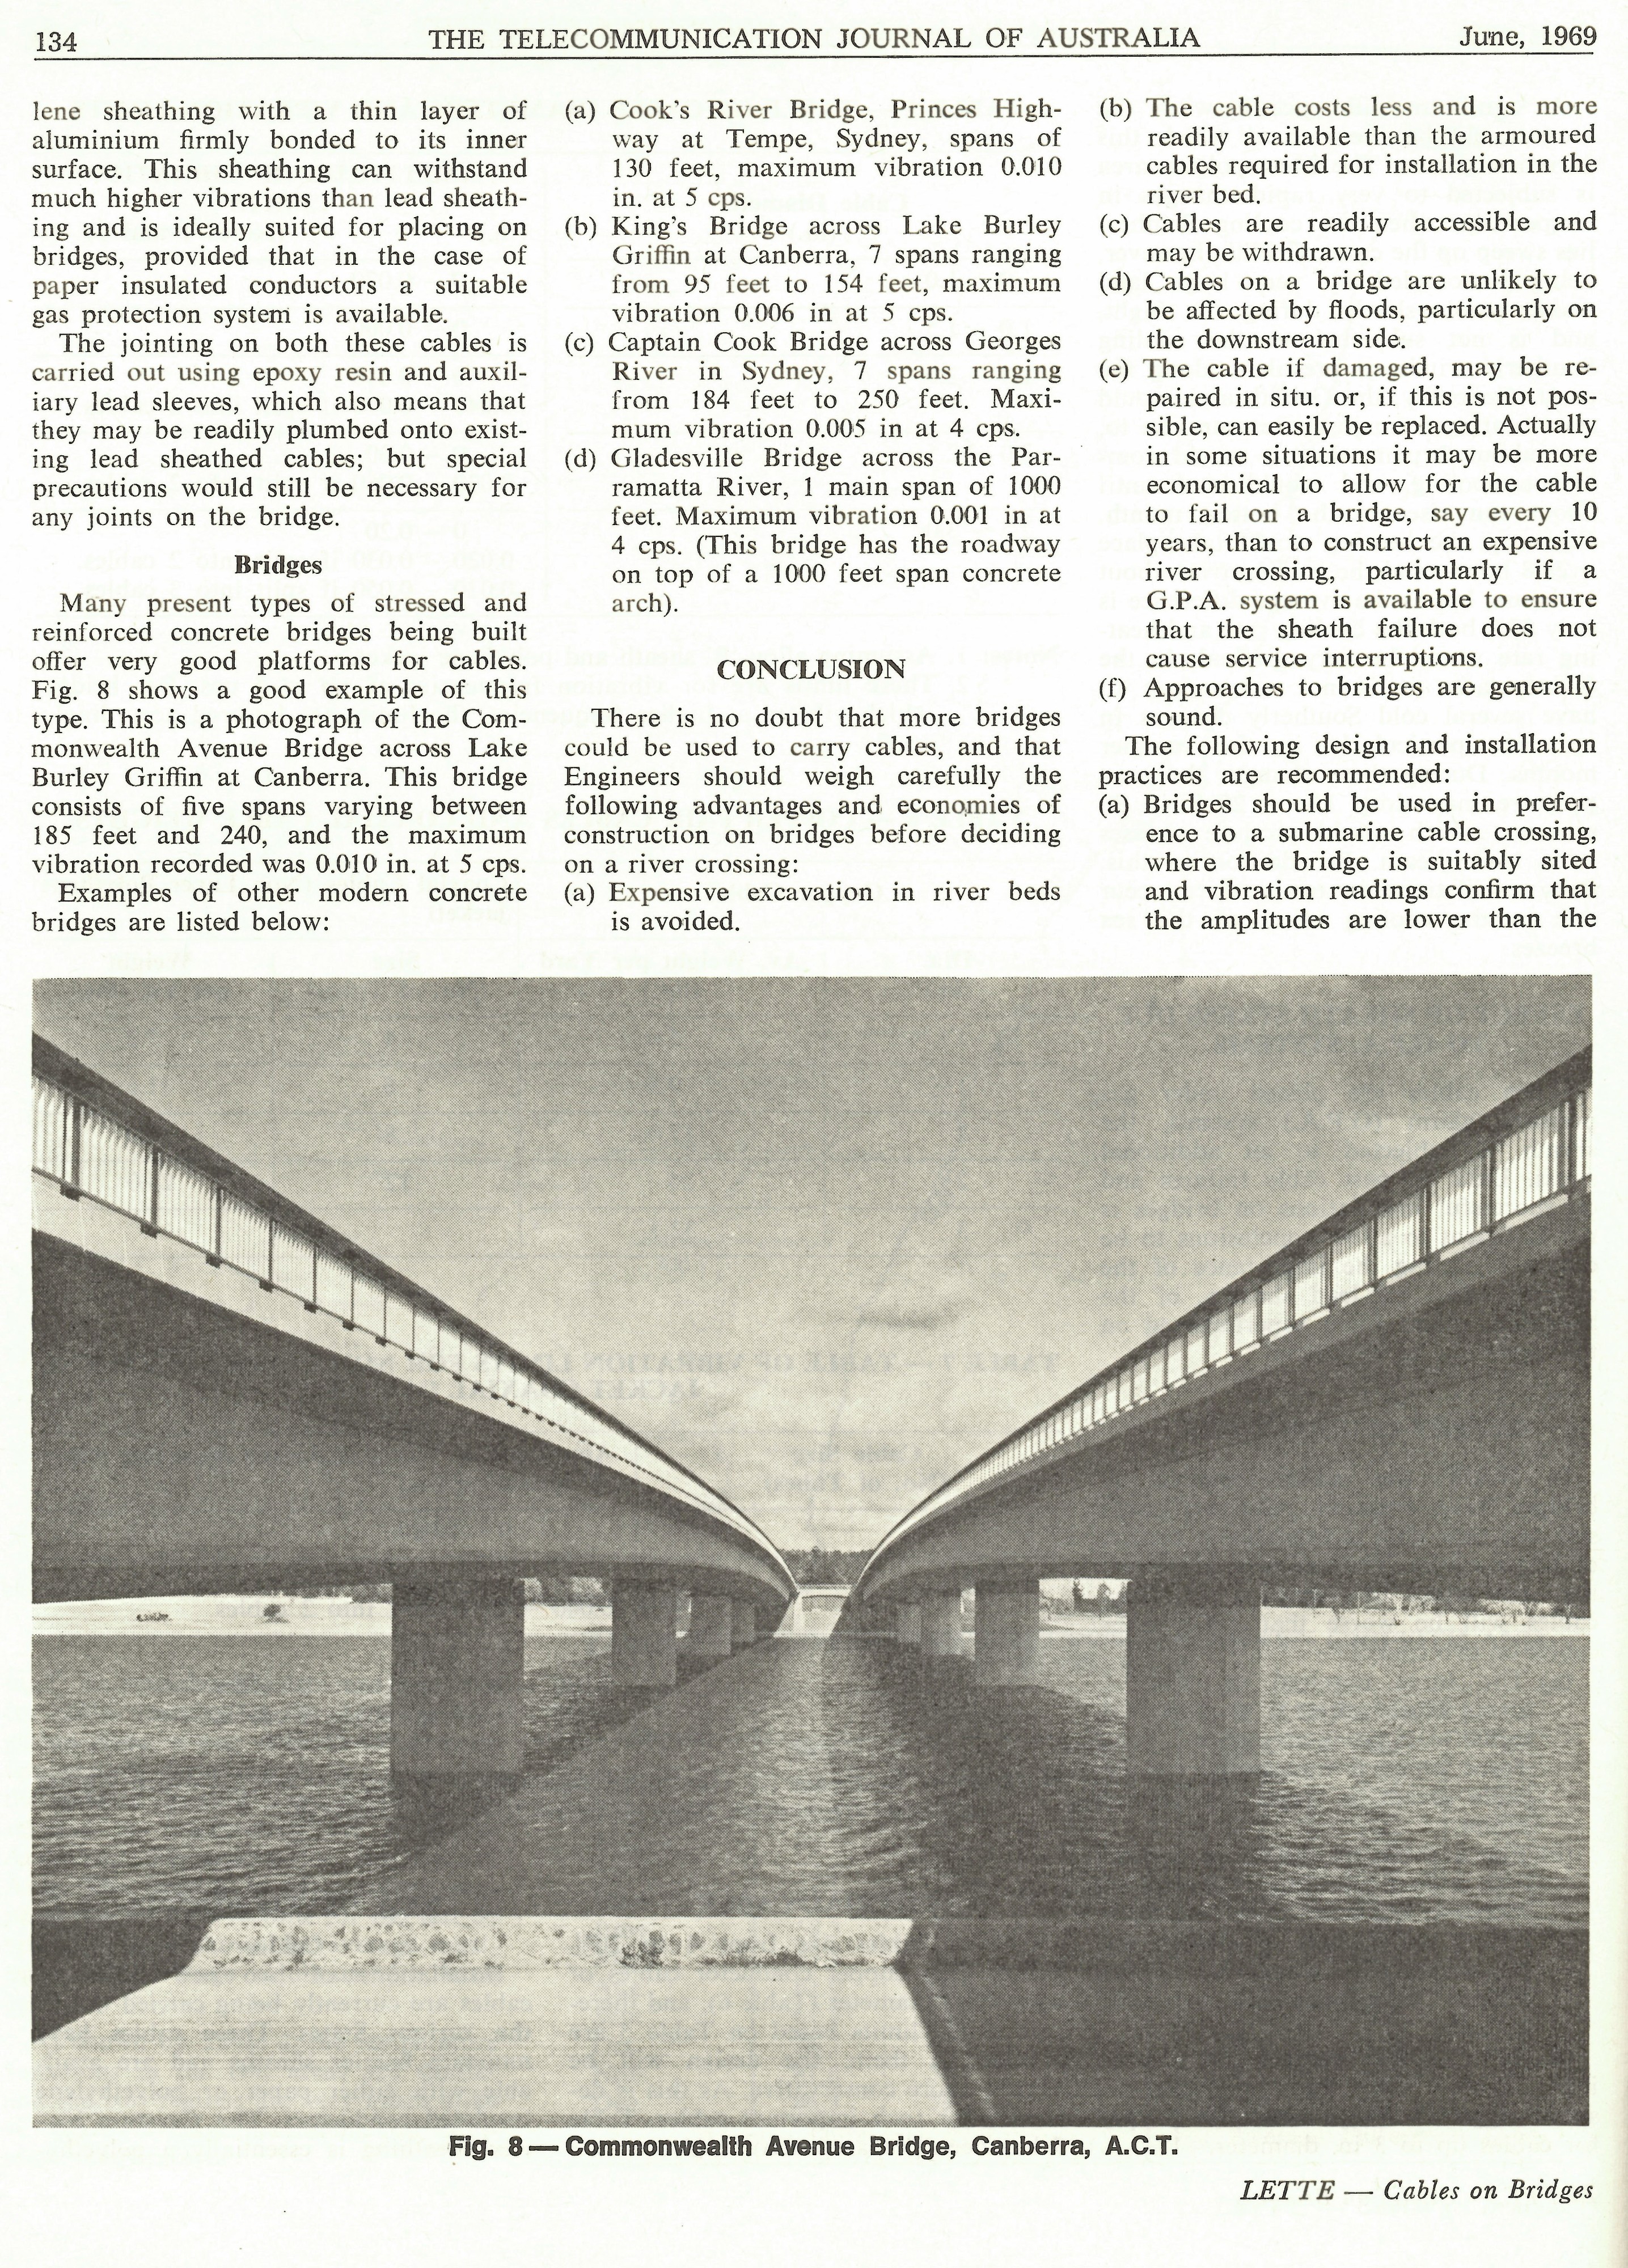 Lead Sheathed Cables on Bridges, Page 134